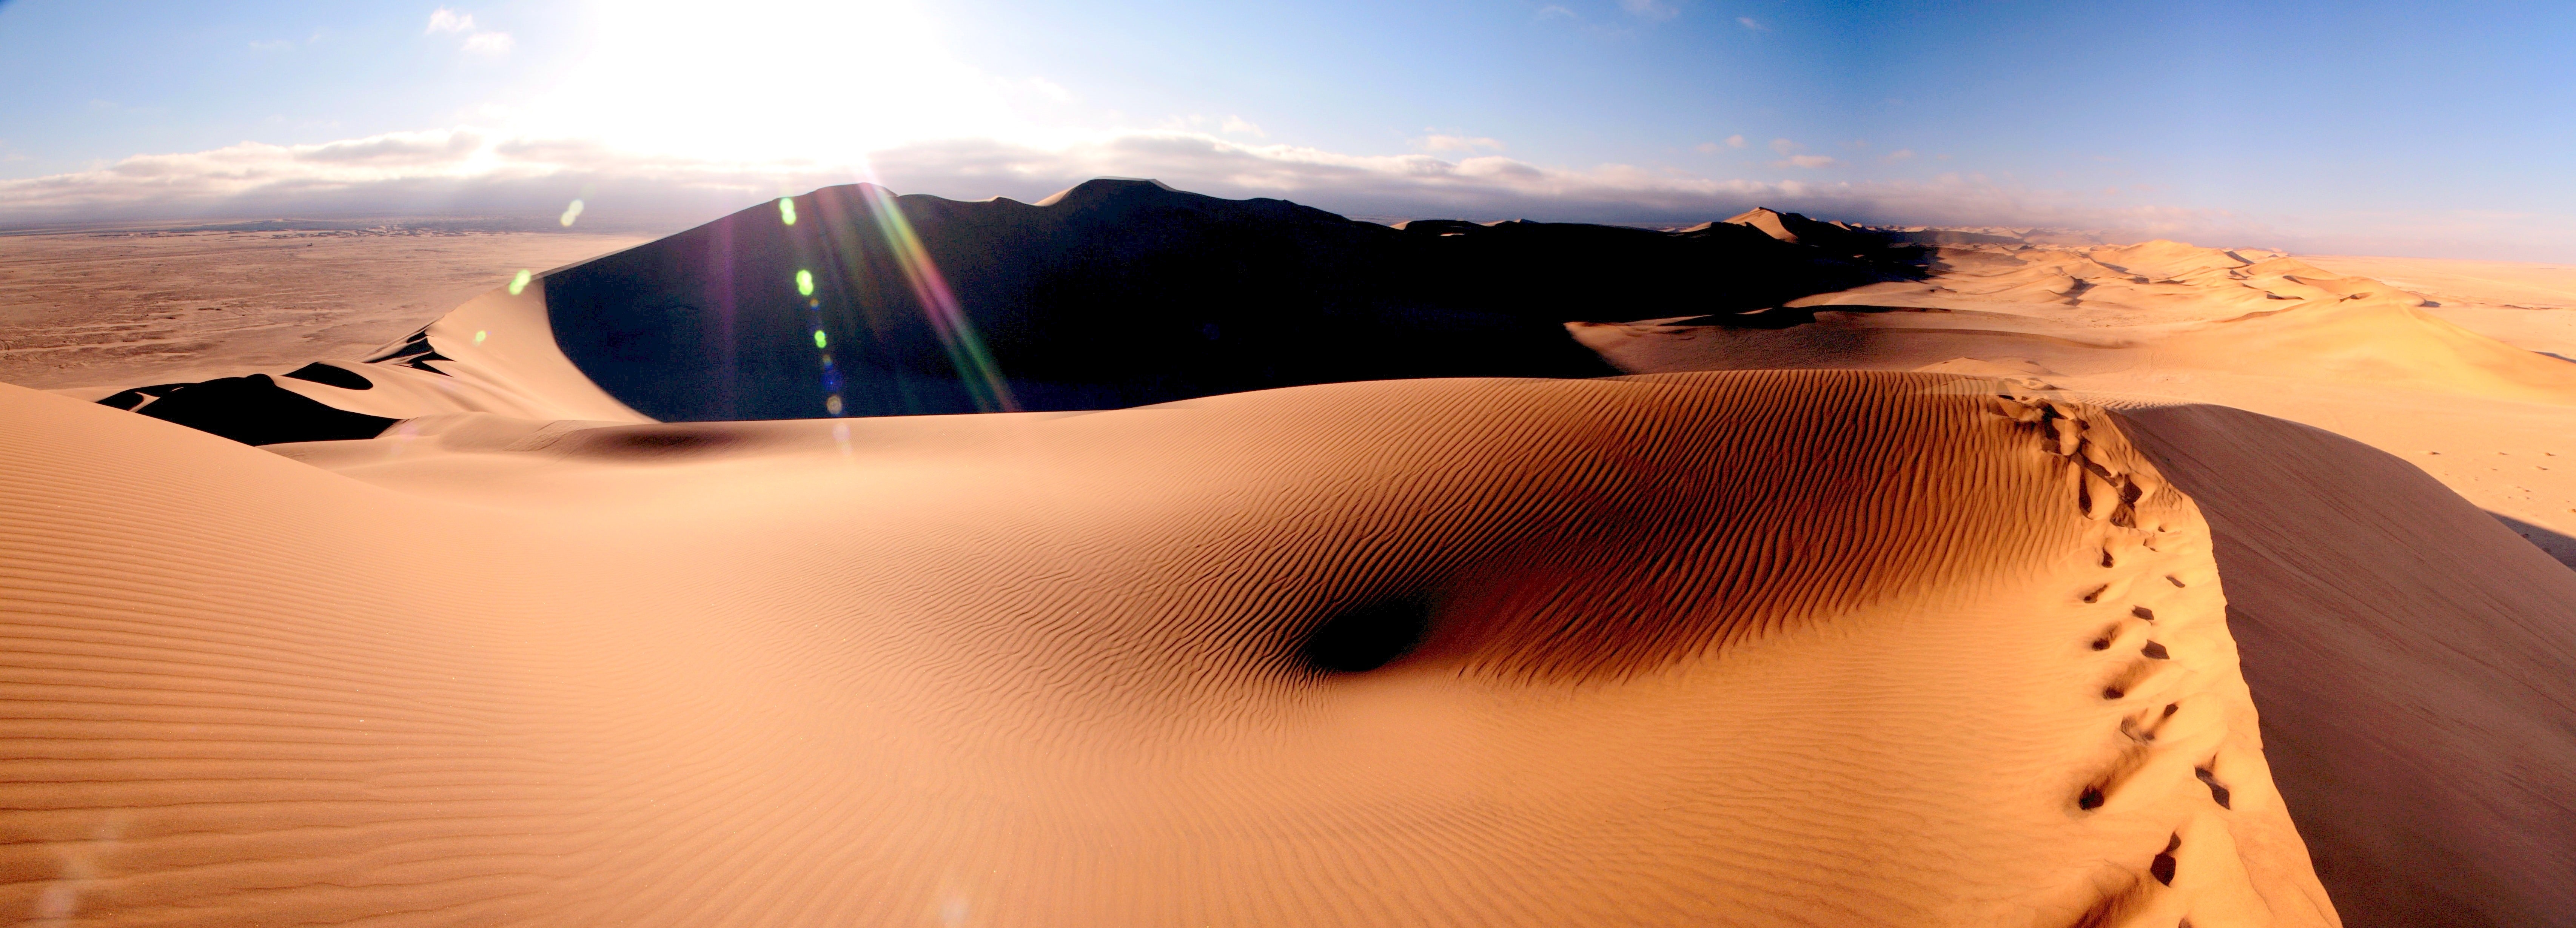 Desert dunes hot